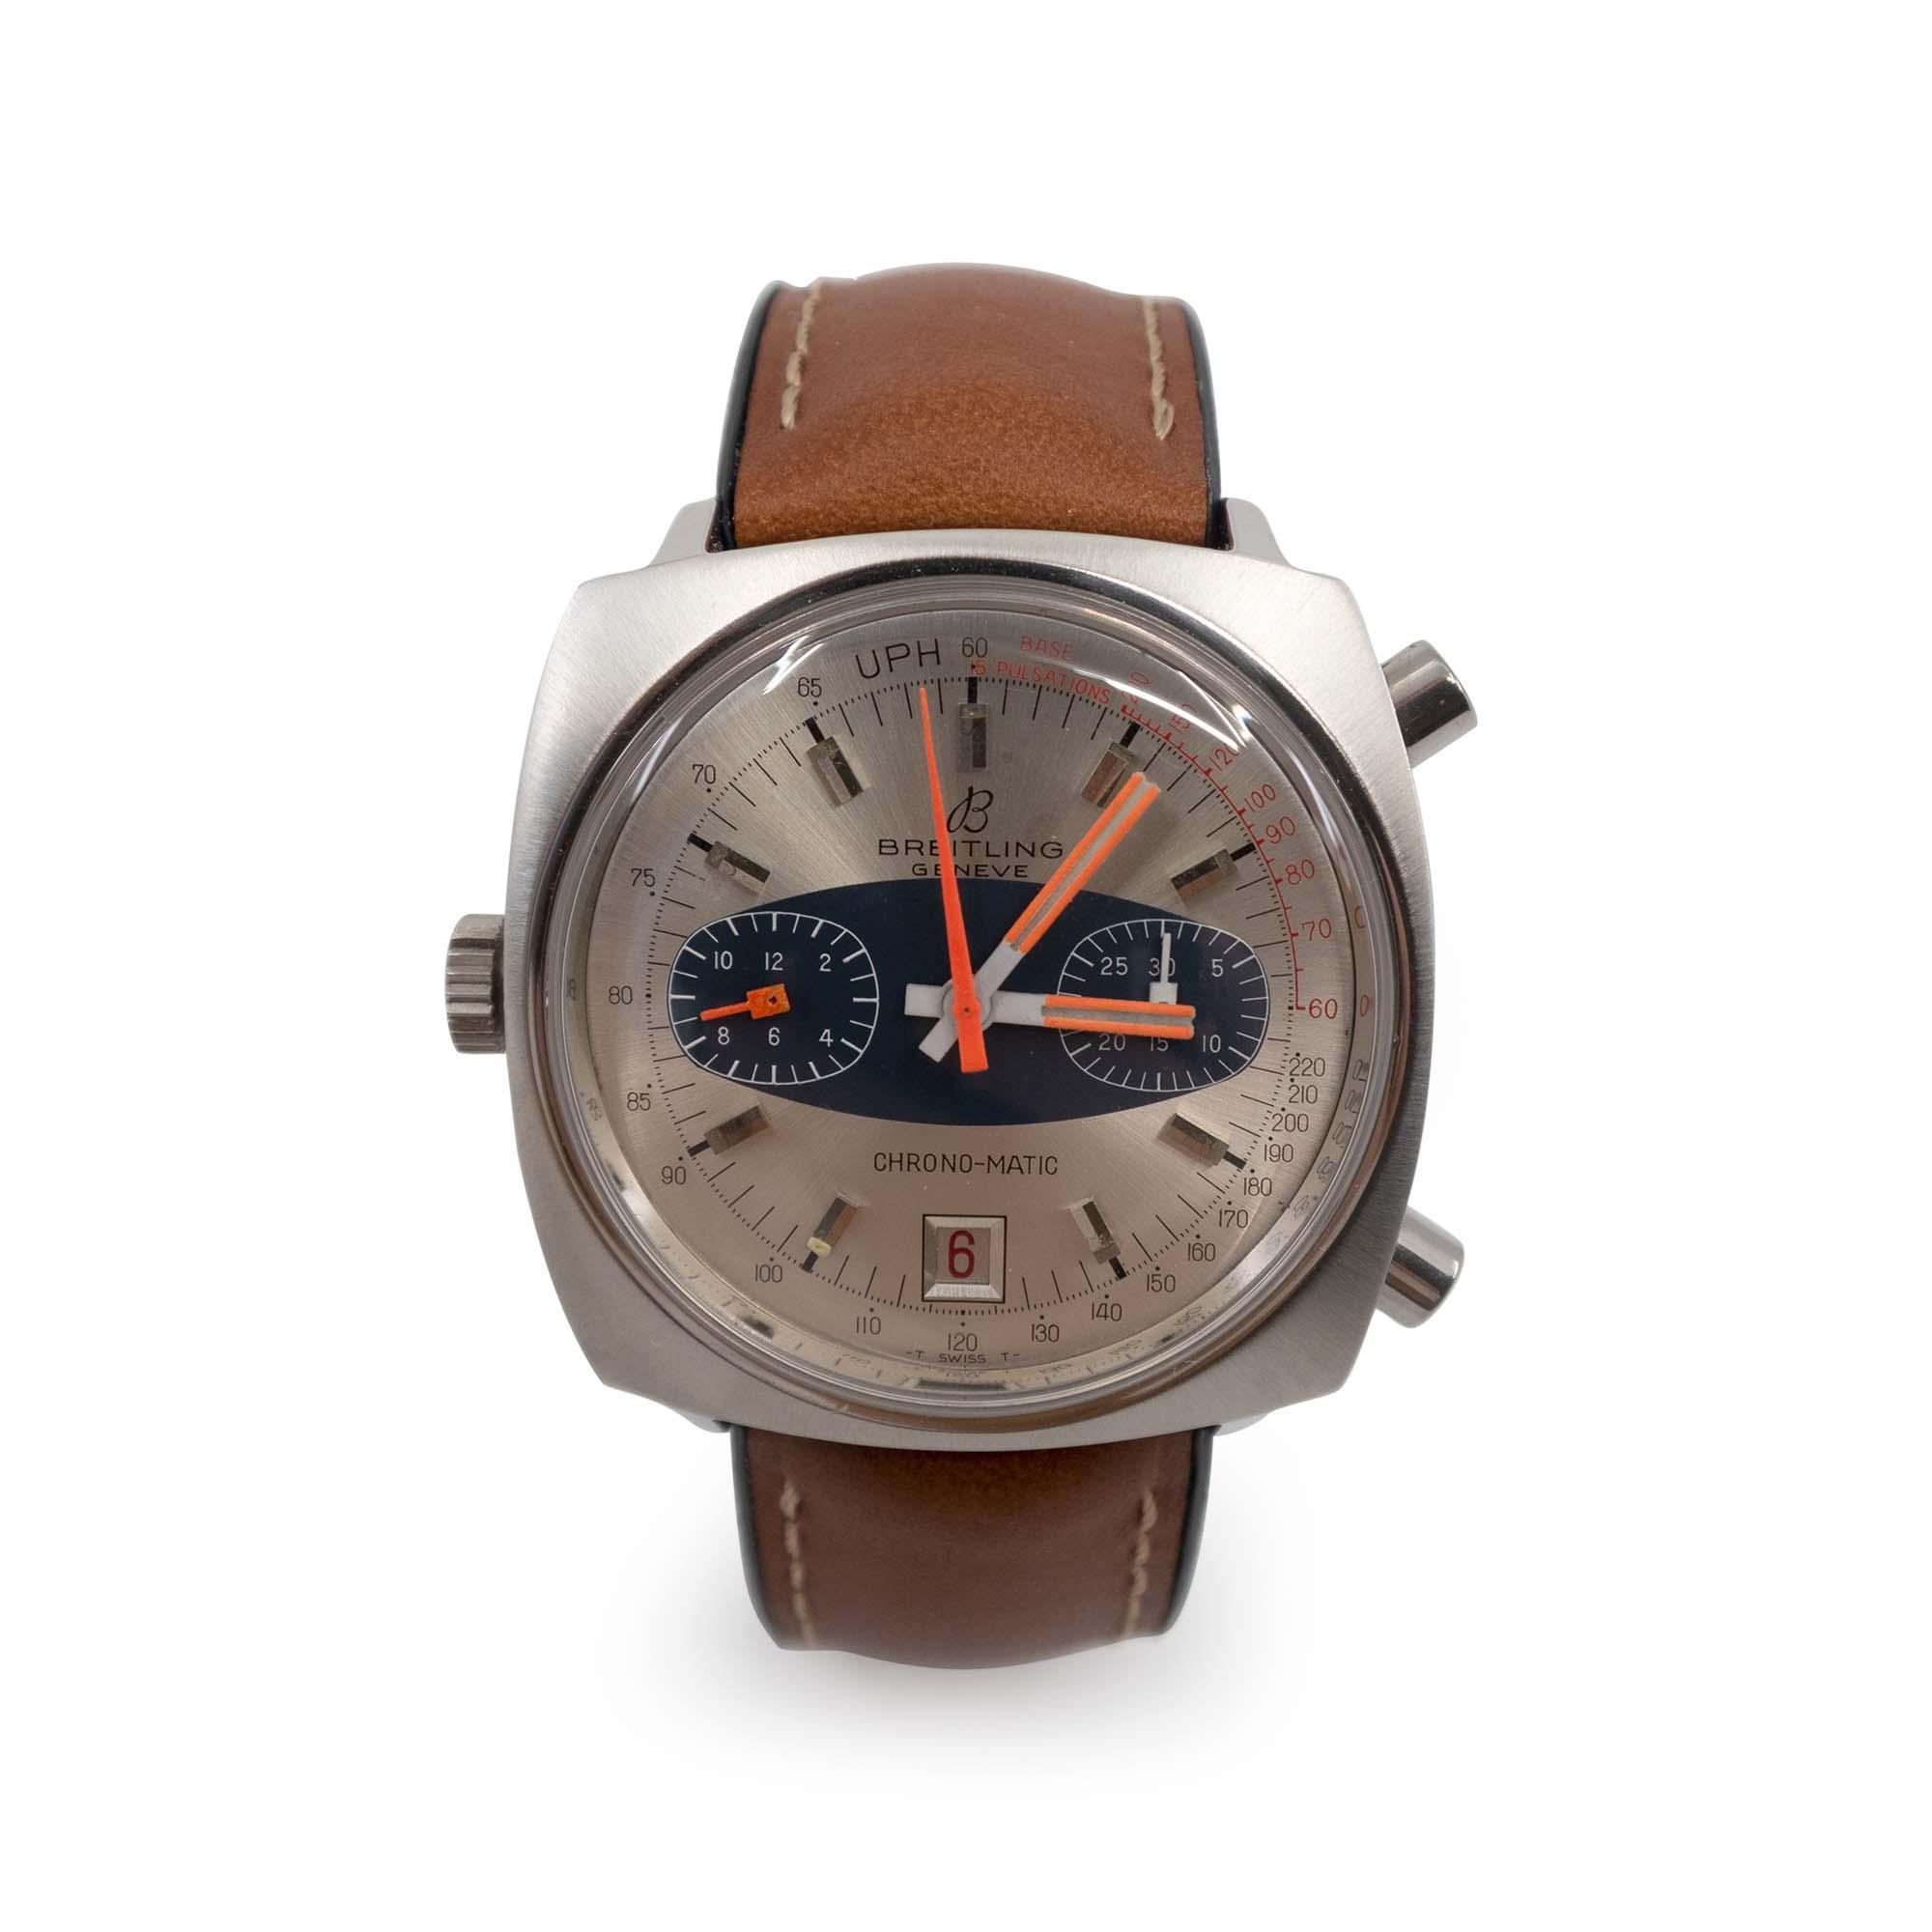 DEPPERICH Vintage-Uhren - Breitling Chrono-Matic